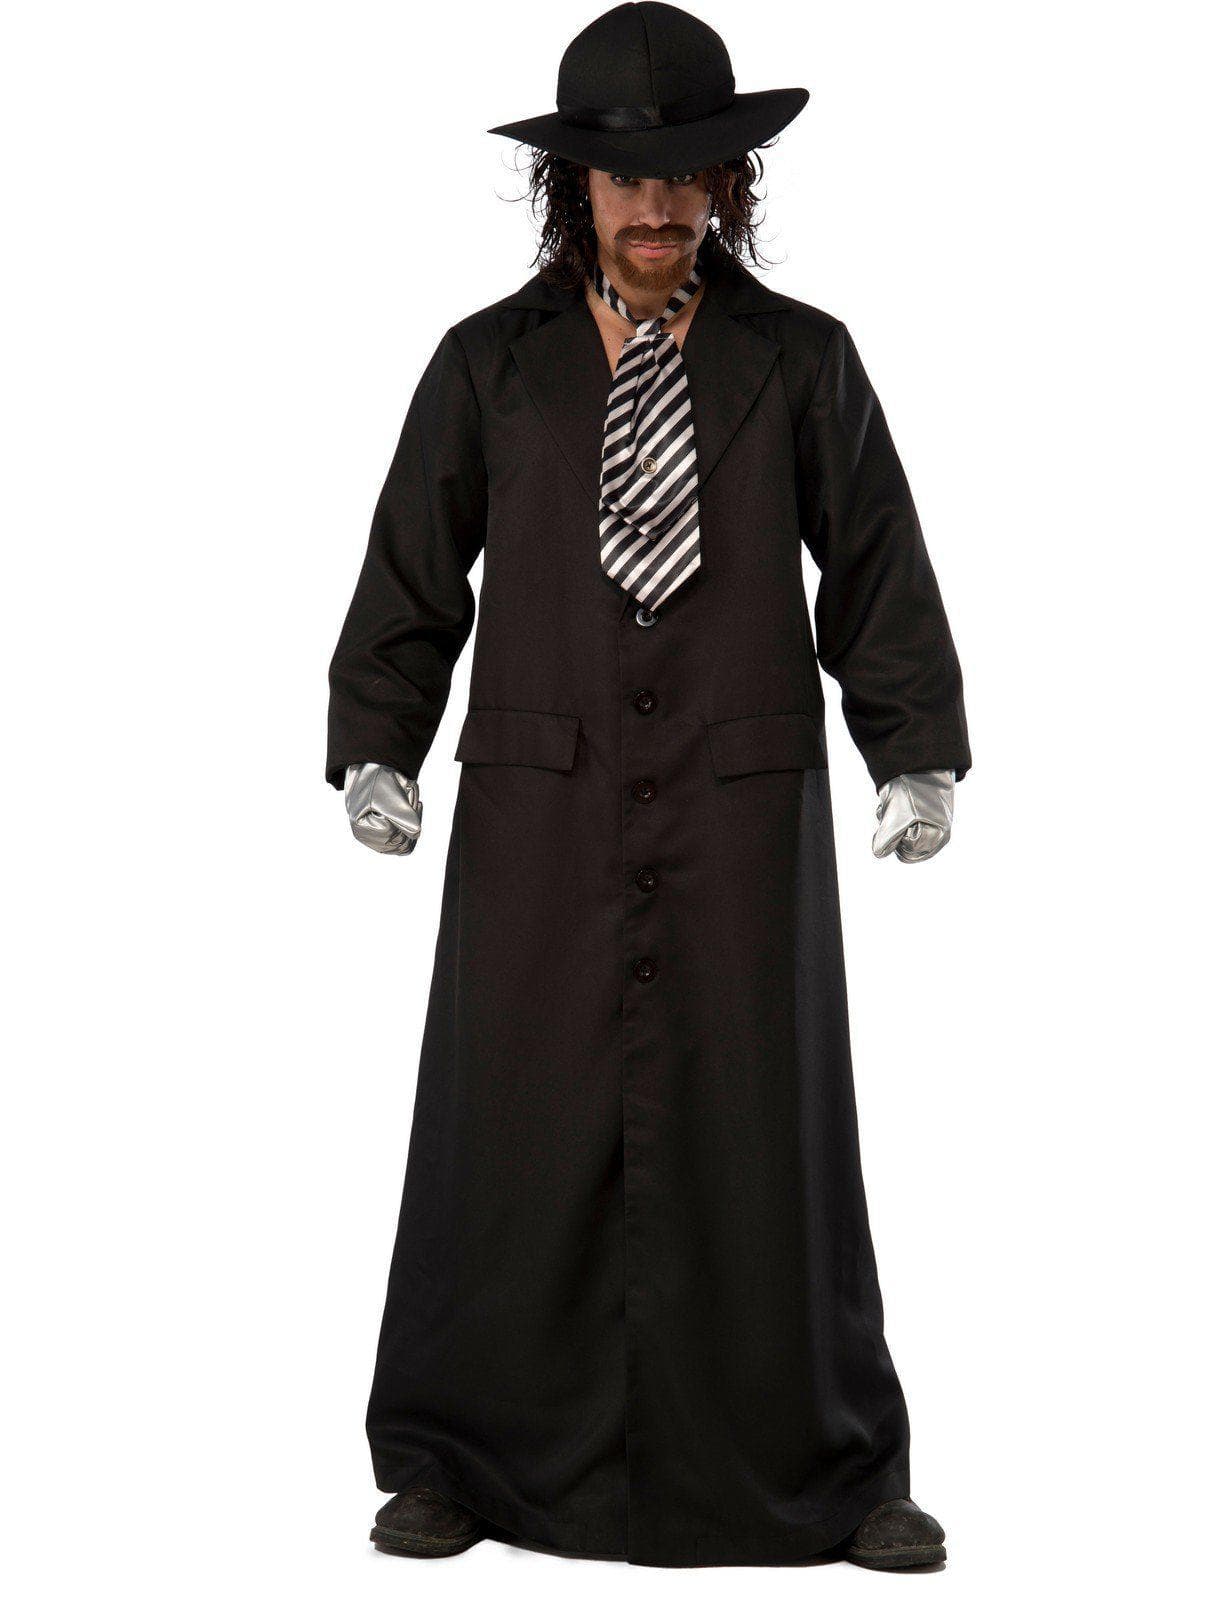 Adult WWE Undertaker Costume - costumes.com